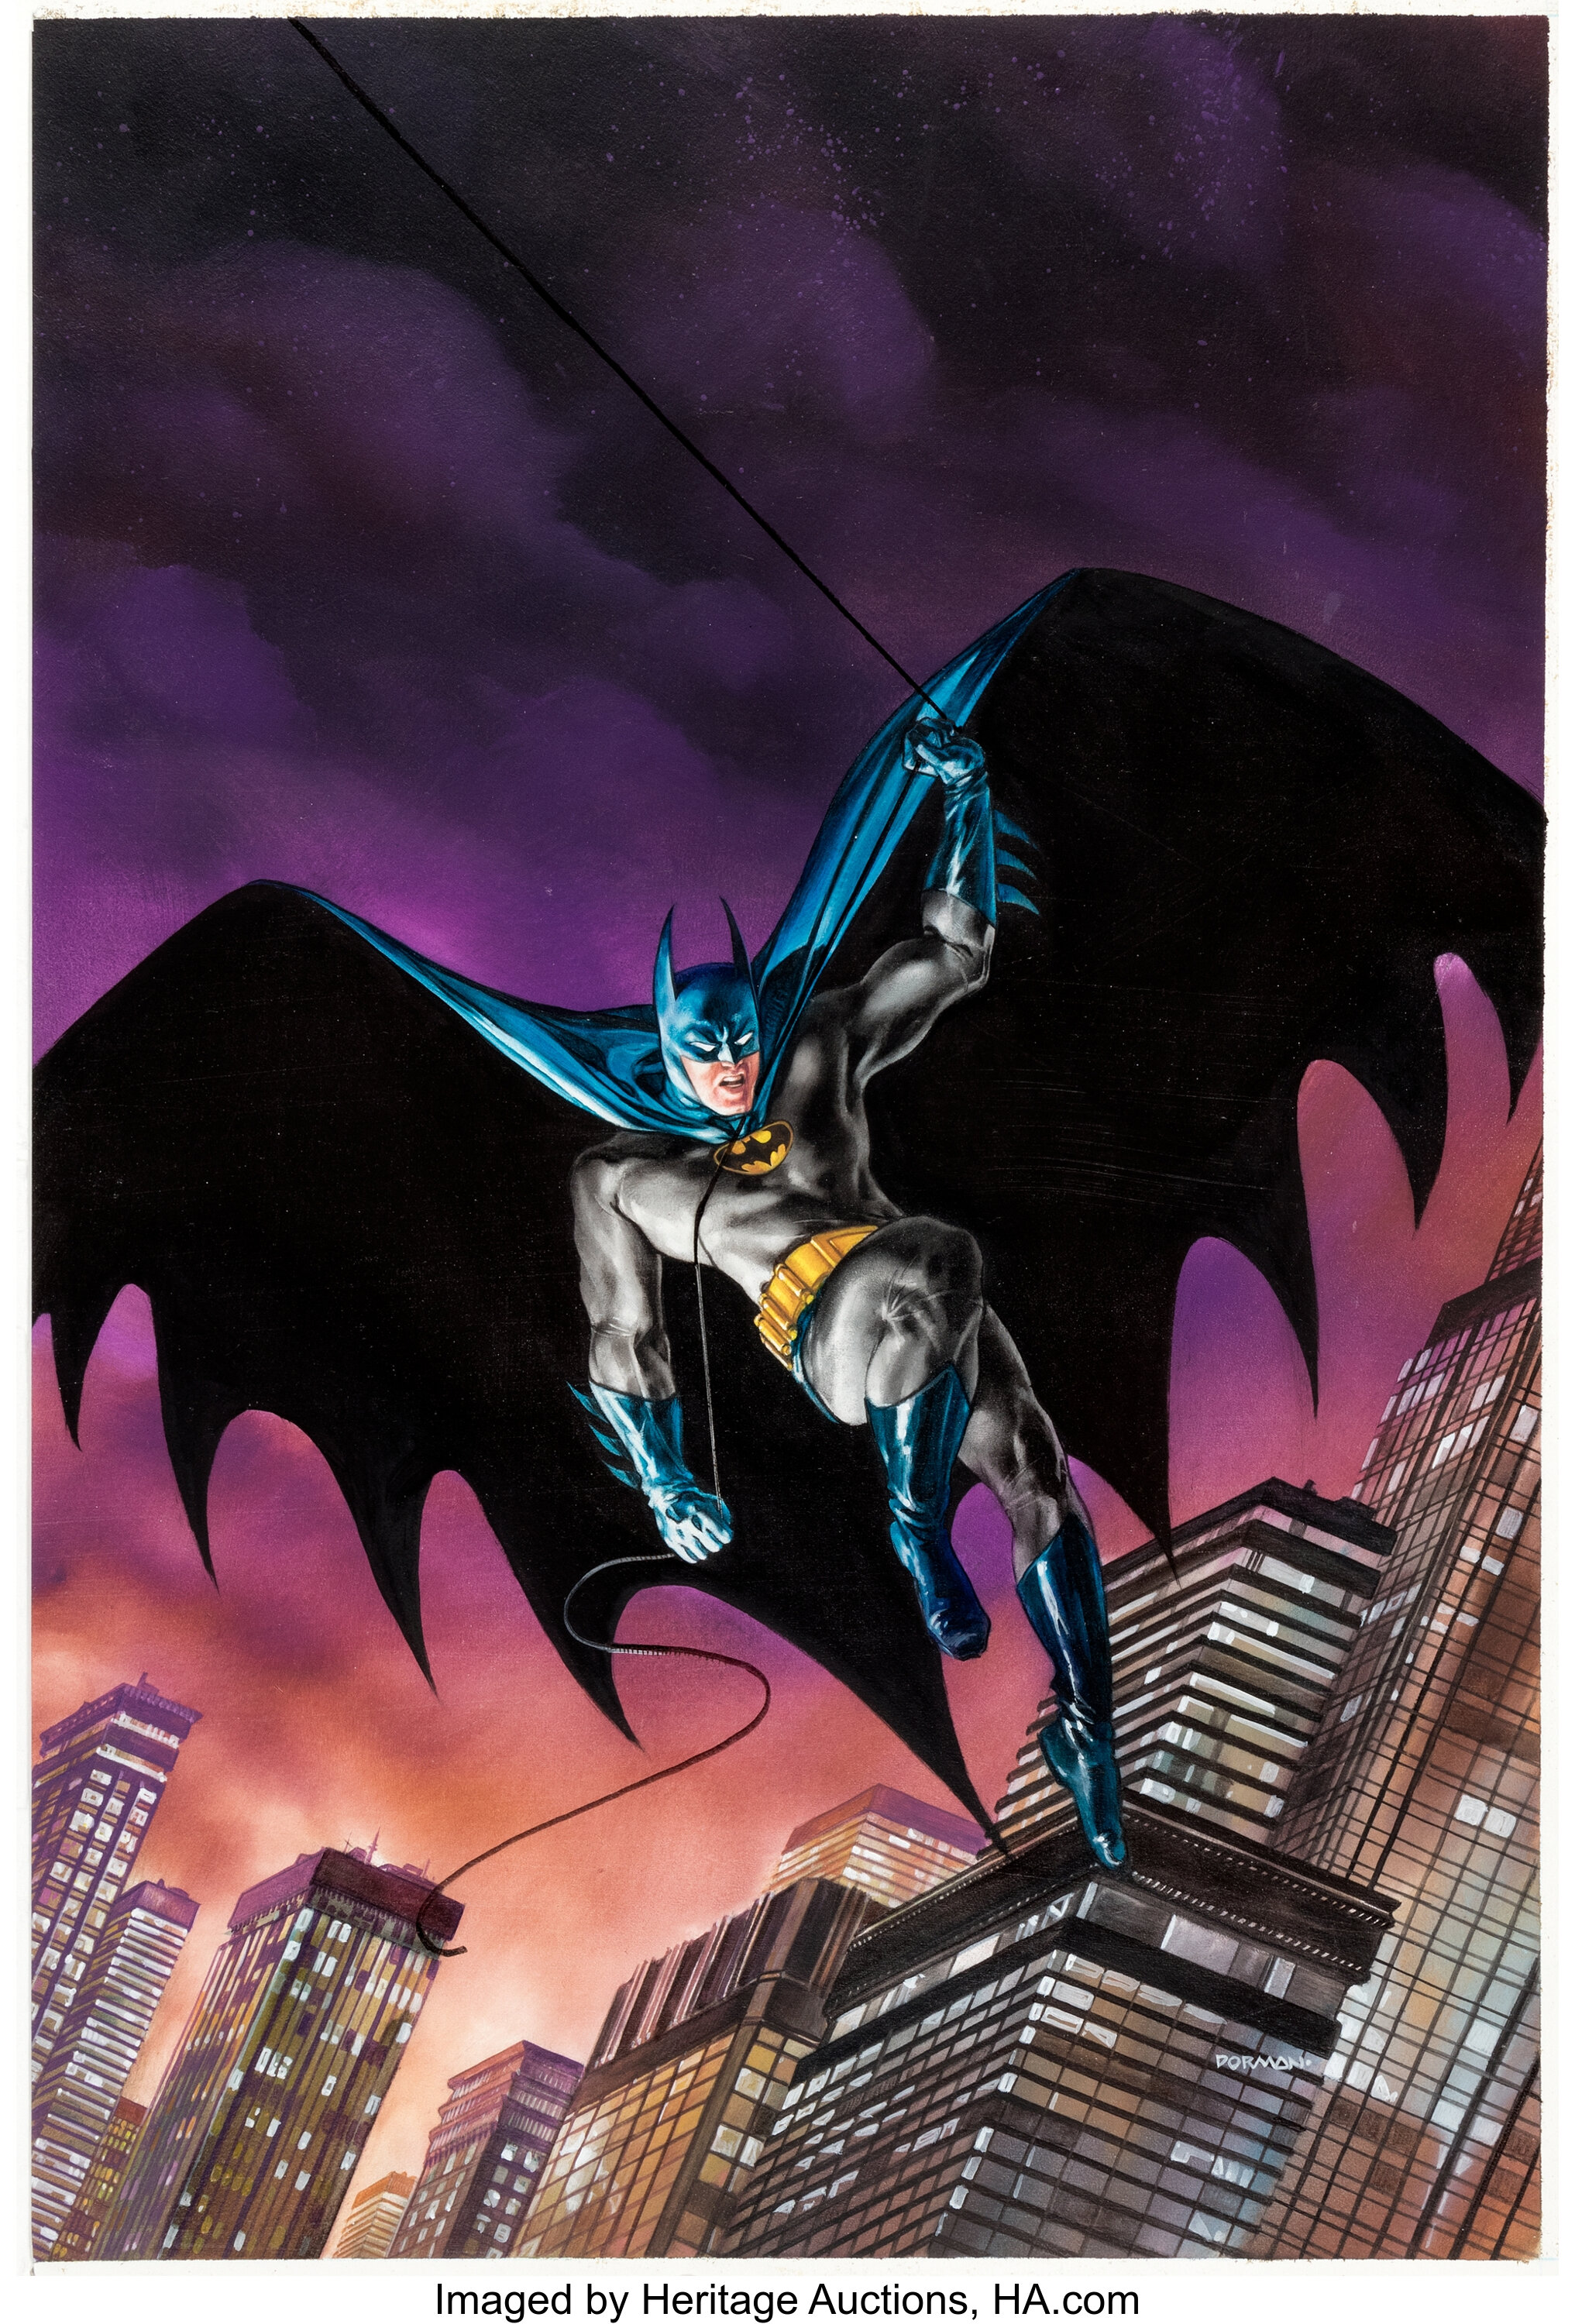 Dave Dorman Batman: To Stalk a Specter Paperback Cover Original Art